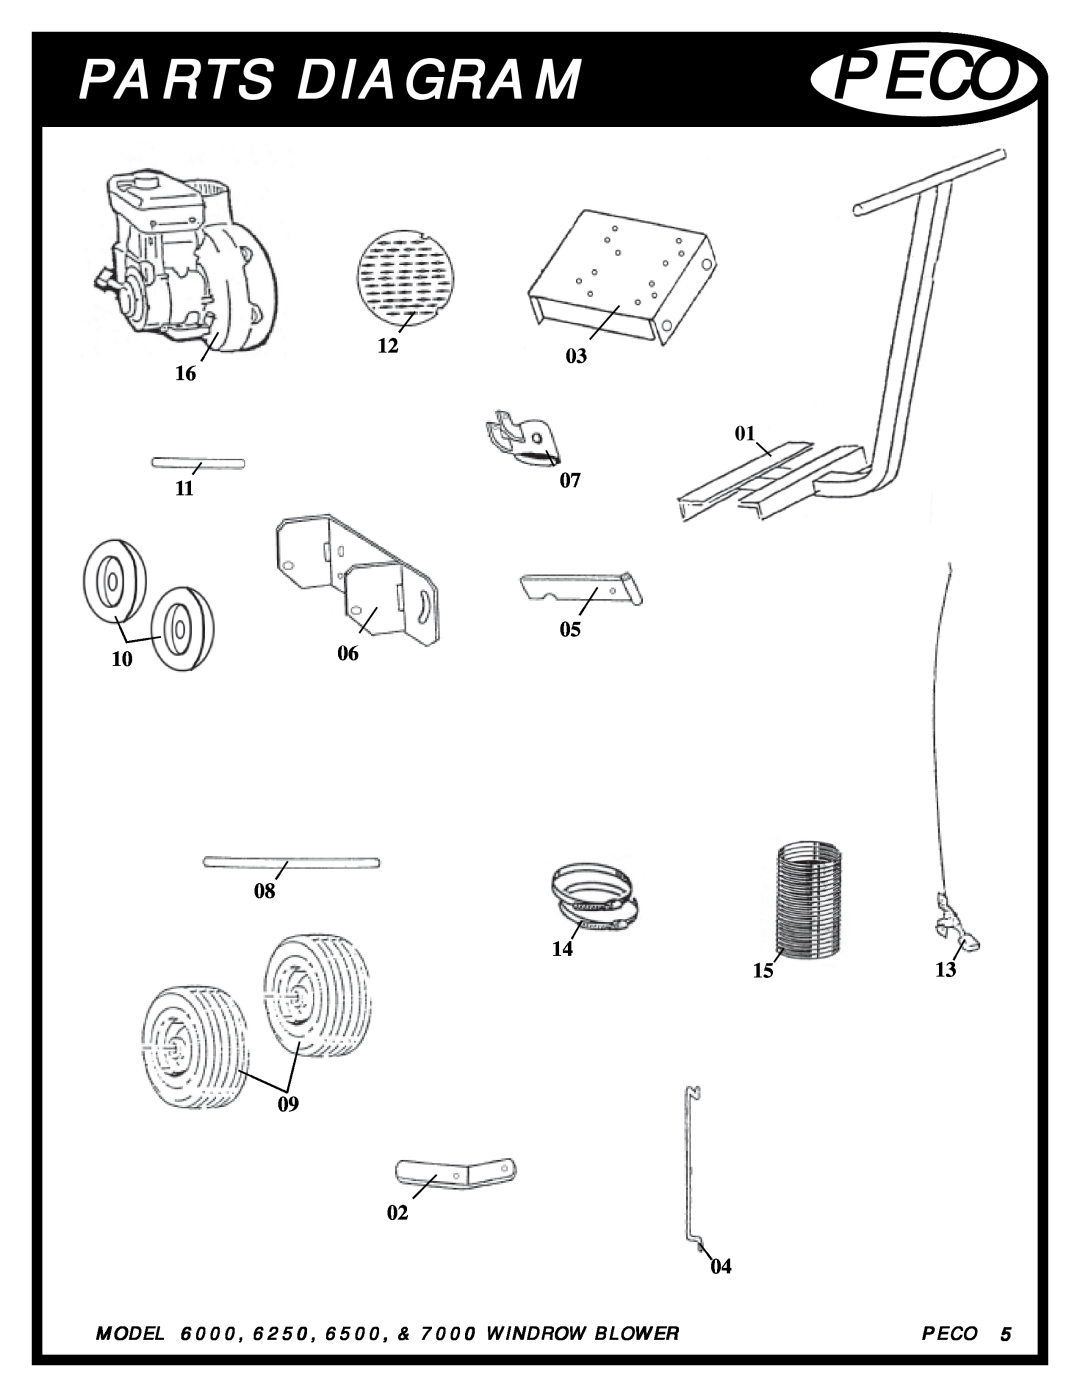 Pecoware manual Parts Diagram, Peco, MODEL 6000, 6250, 6500, & 7000 WINDROW BLOWER 